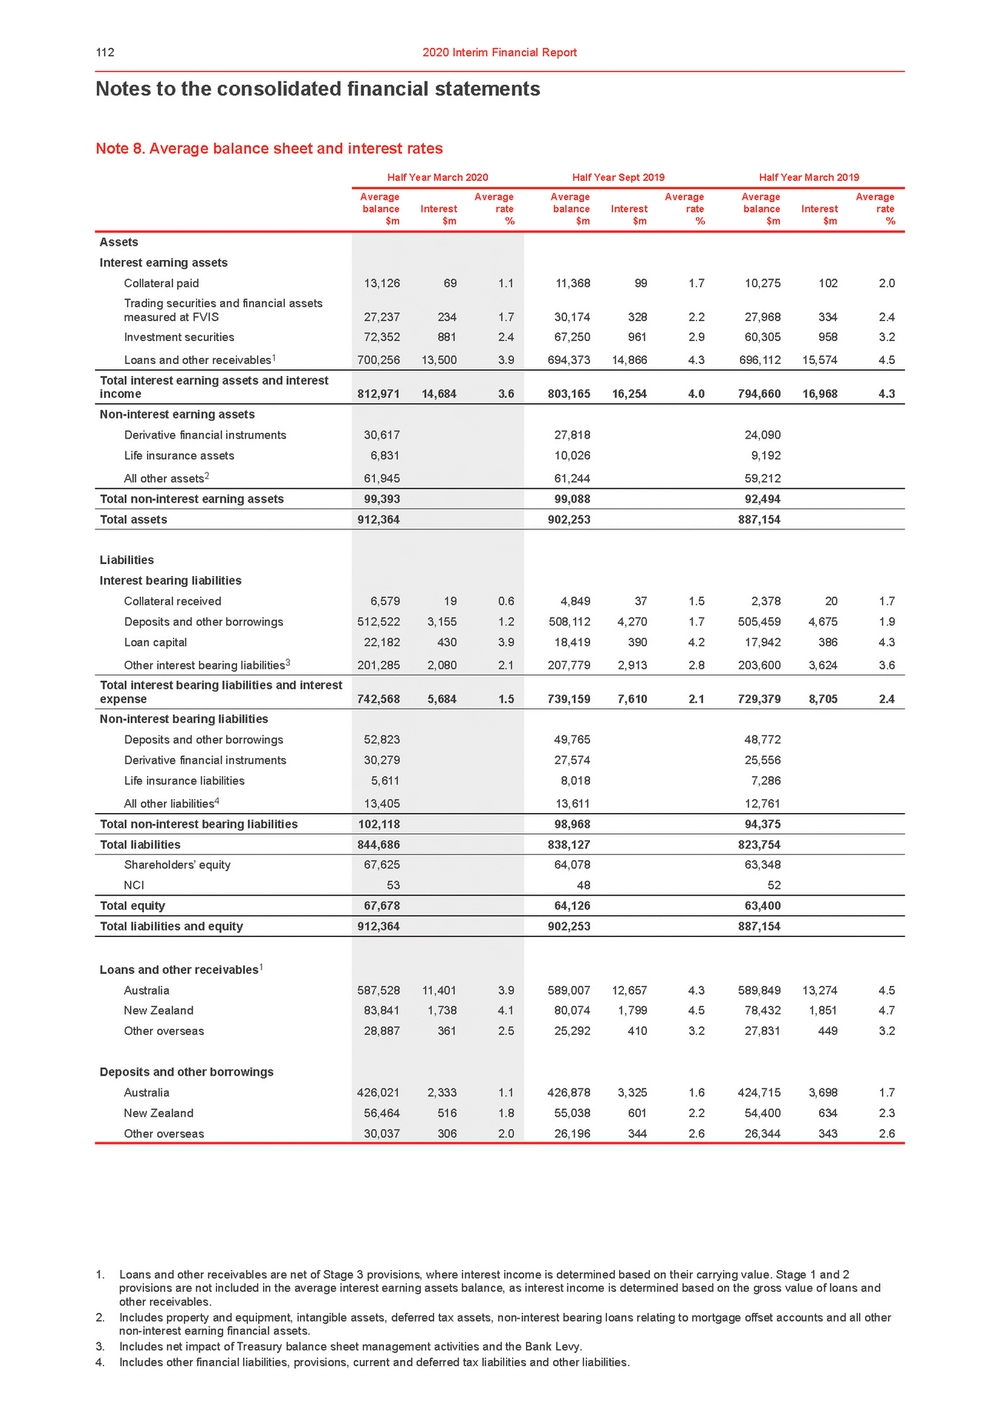 11676-3-ex1_westpac 2020 interim financial results announcement_page_117.jpg